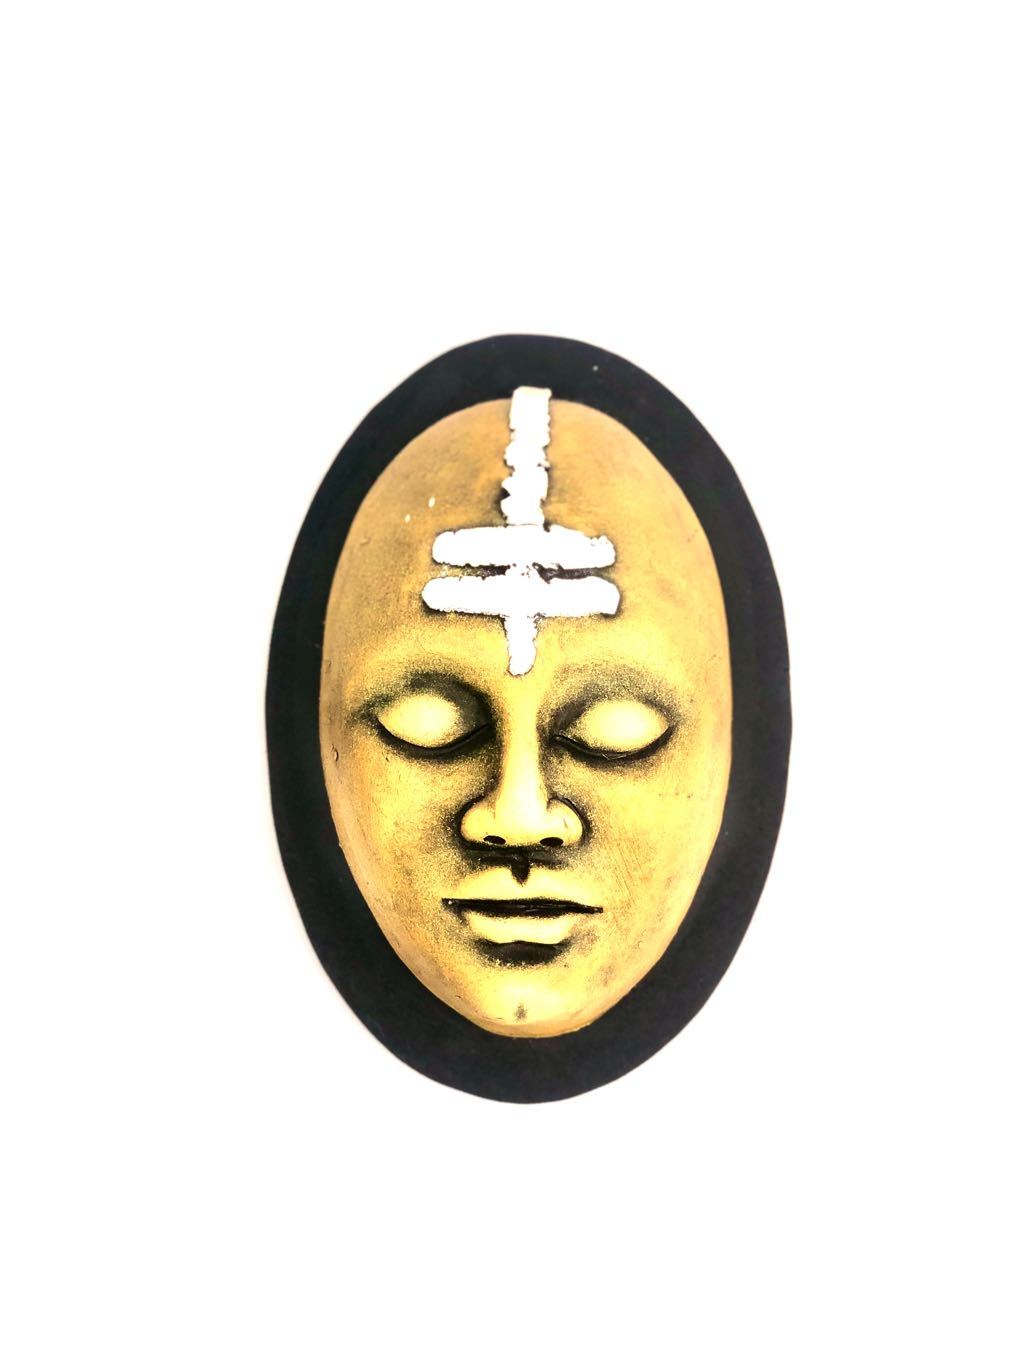 Creative Terracotta Masks In Vibrant Shades On MDF Hanging Tamrapatra